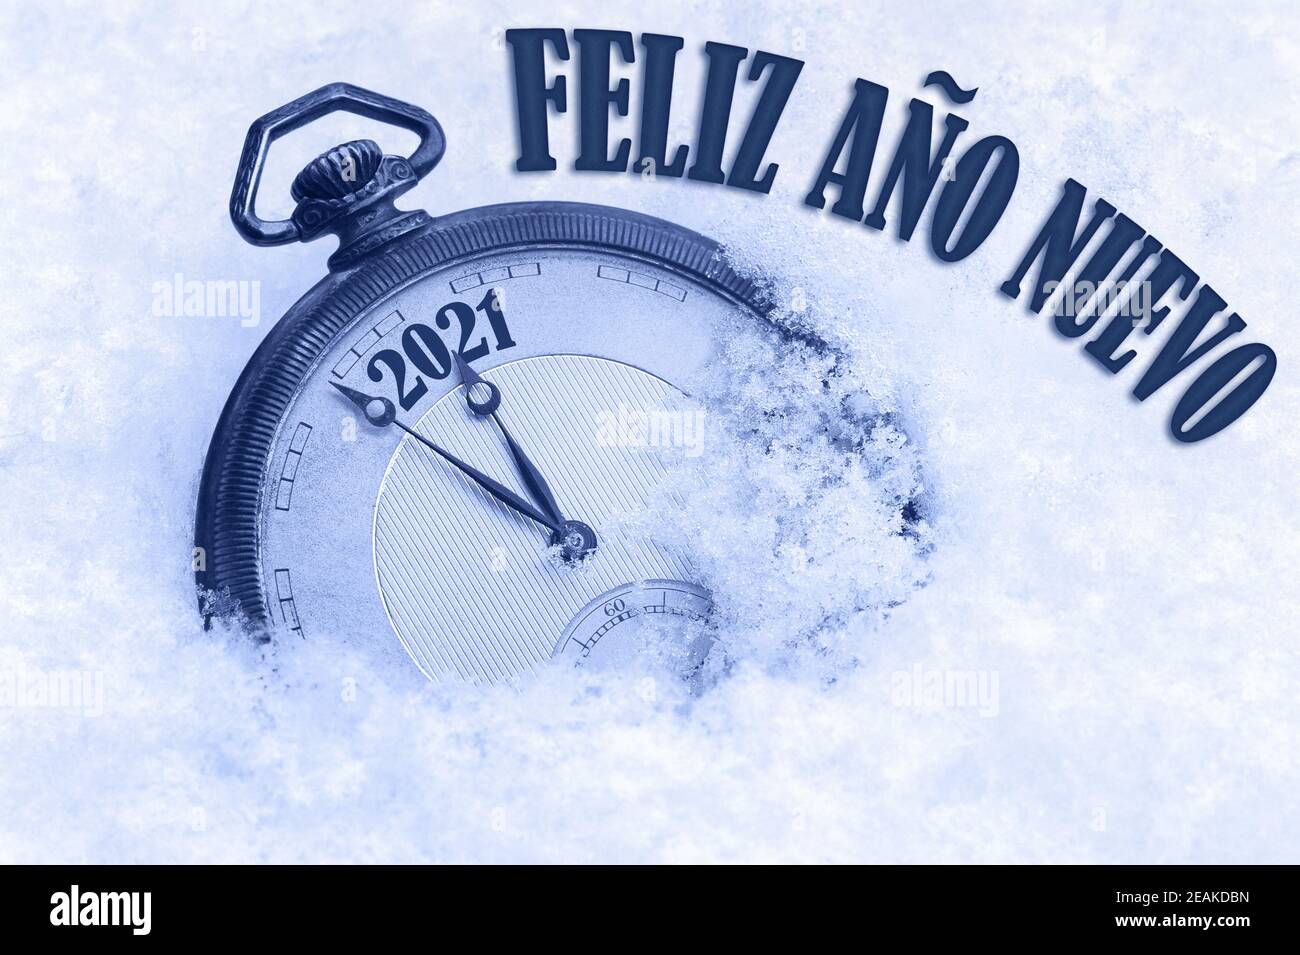 2021 greeting card, Happy New Year 2021, in Spanish language, Feliz ano nuevo text, countdown to midnight Stock Photo